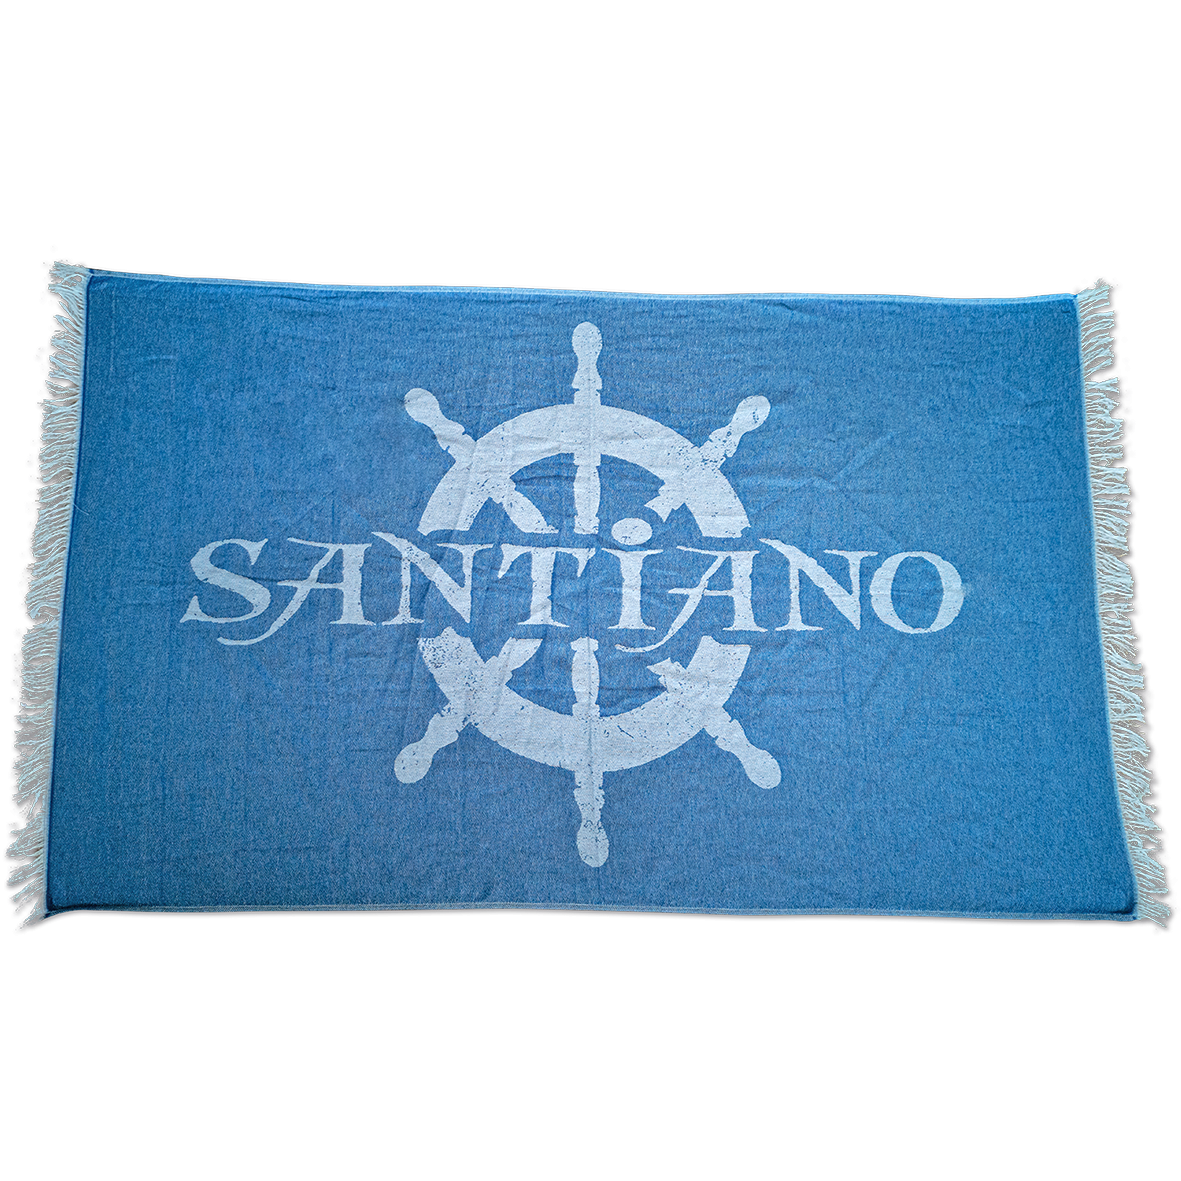 Santiano beach towel